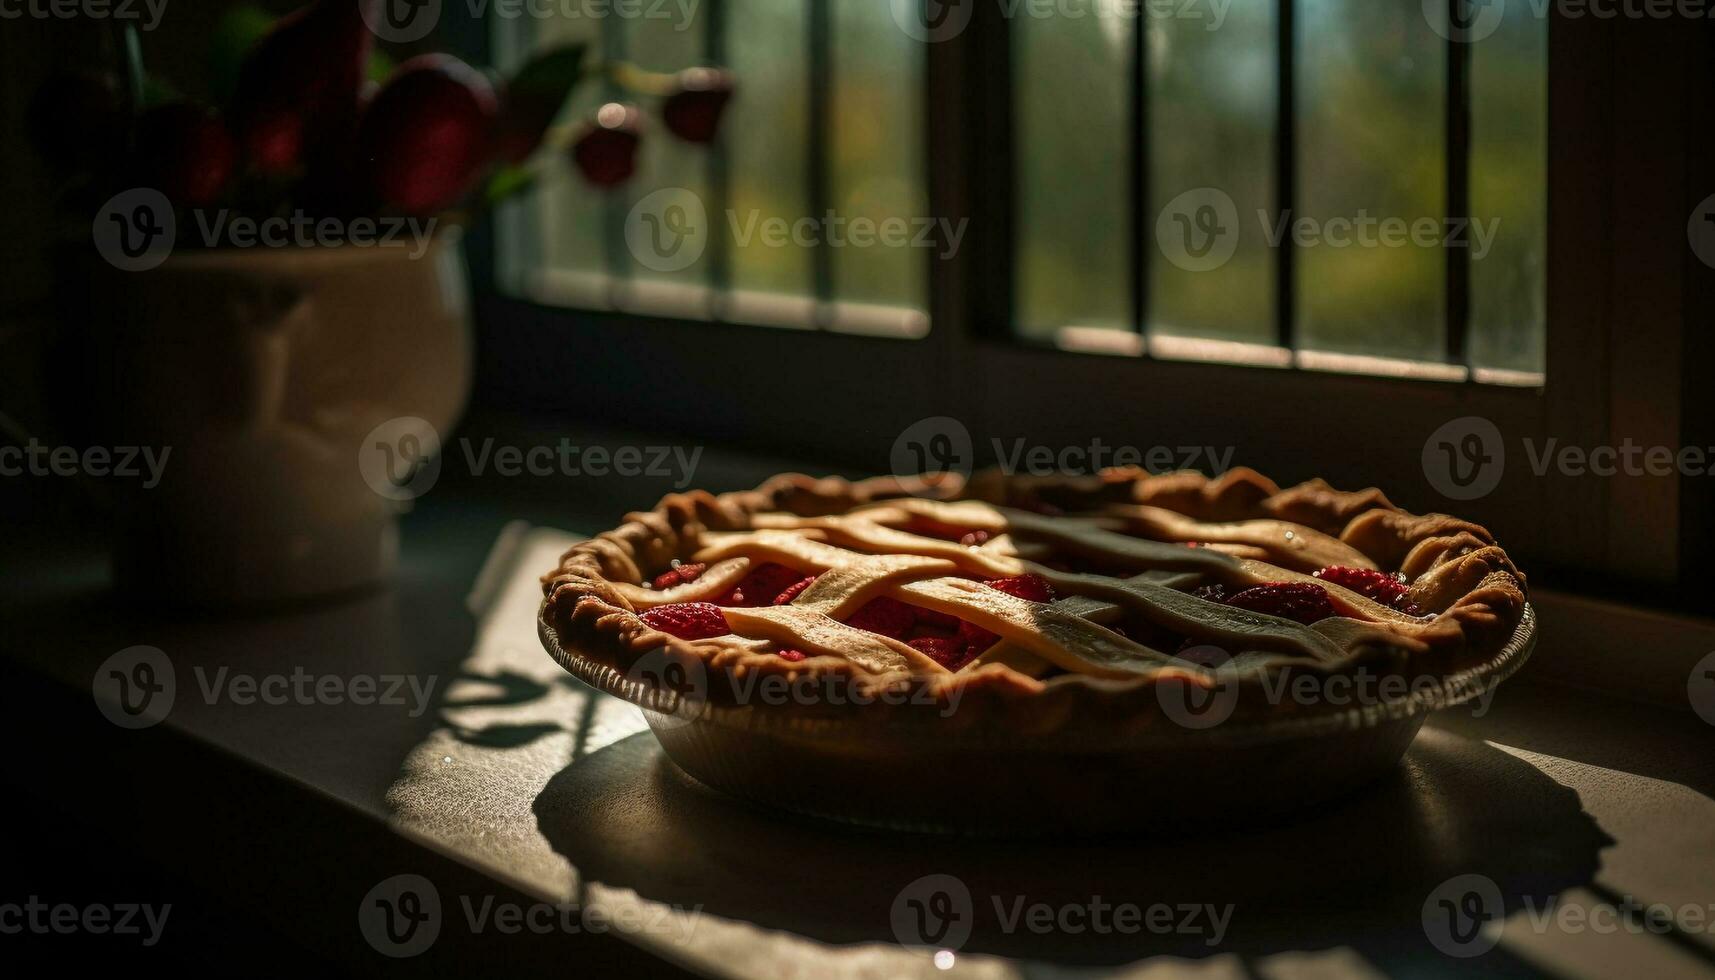 Freshly baked berry tart, a sweet indulgence generated by AI photo